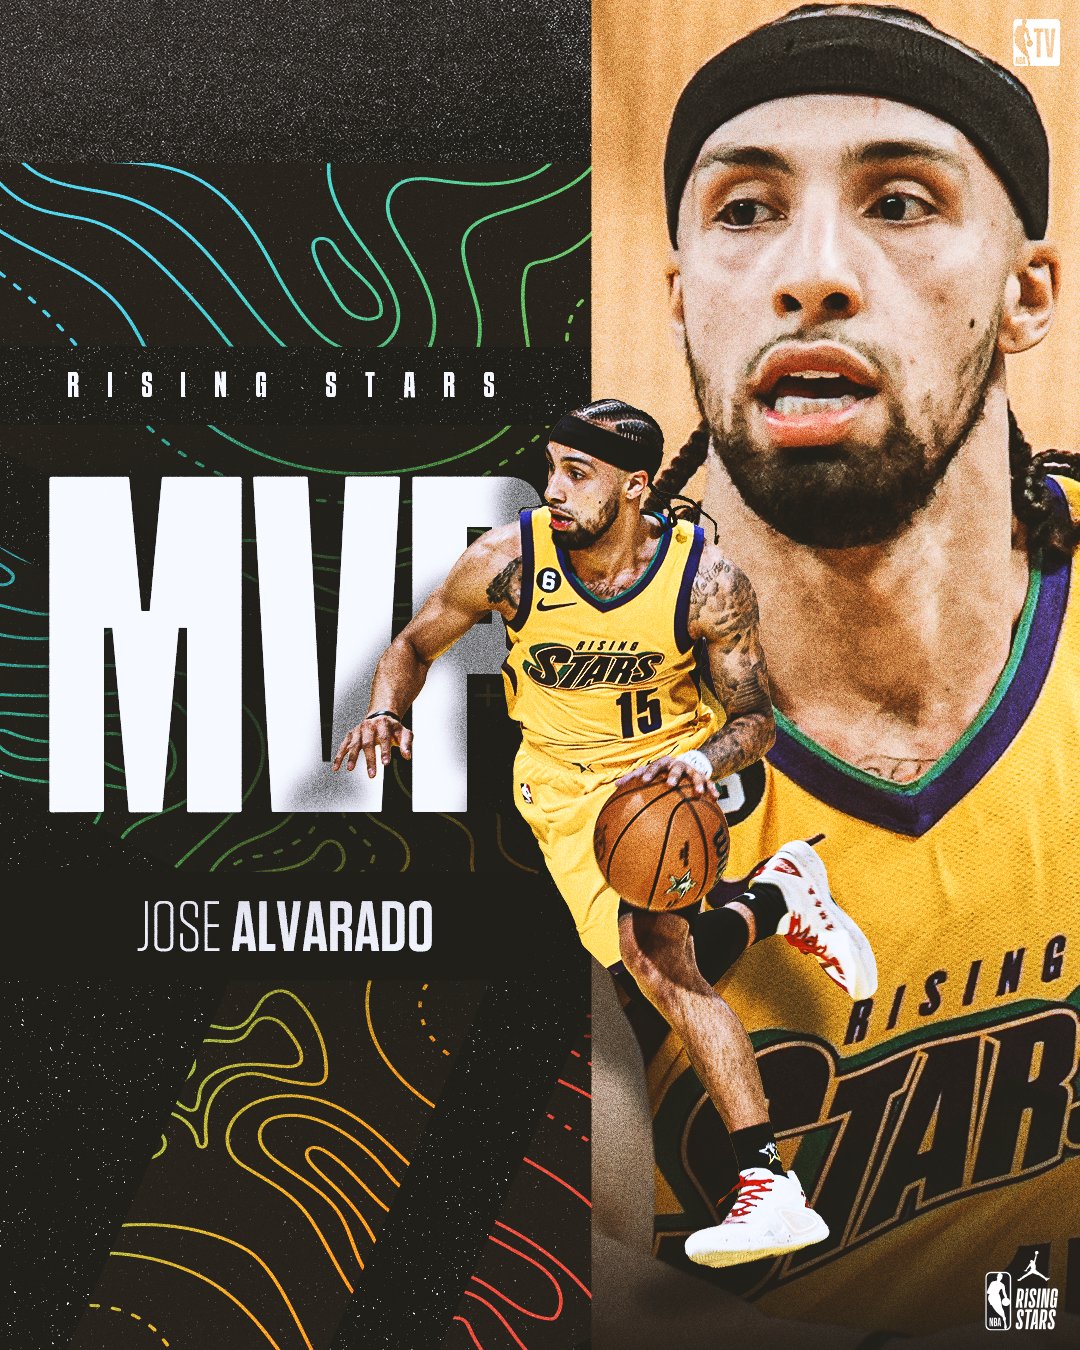 NBA TV on X: Jose Alvarado is the 2023 #JordanRisingStars MVP